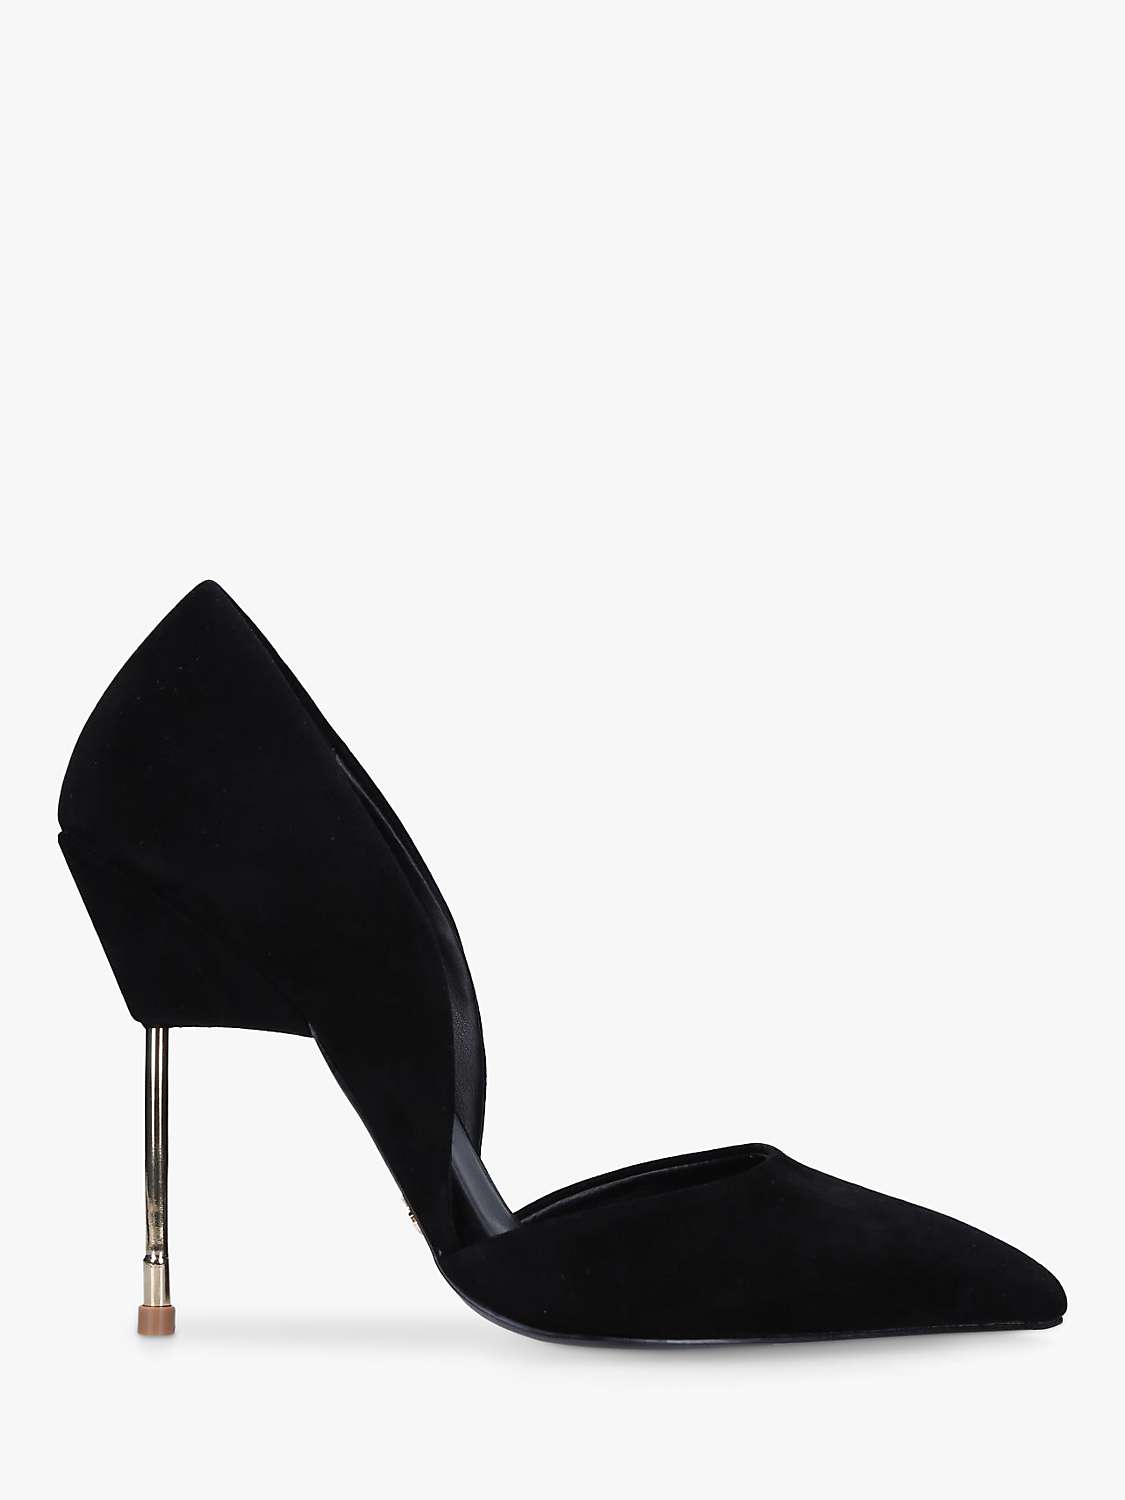 Buy Kurt Geiger London Bond Suede Court Shoes, Black Online at johnlewis.com